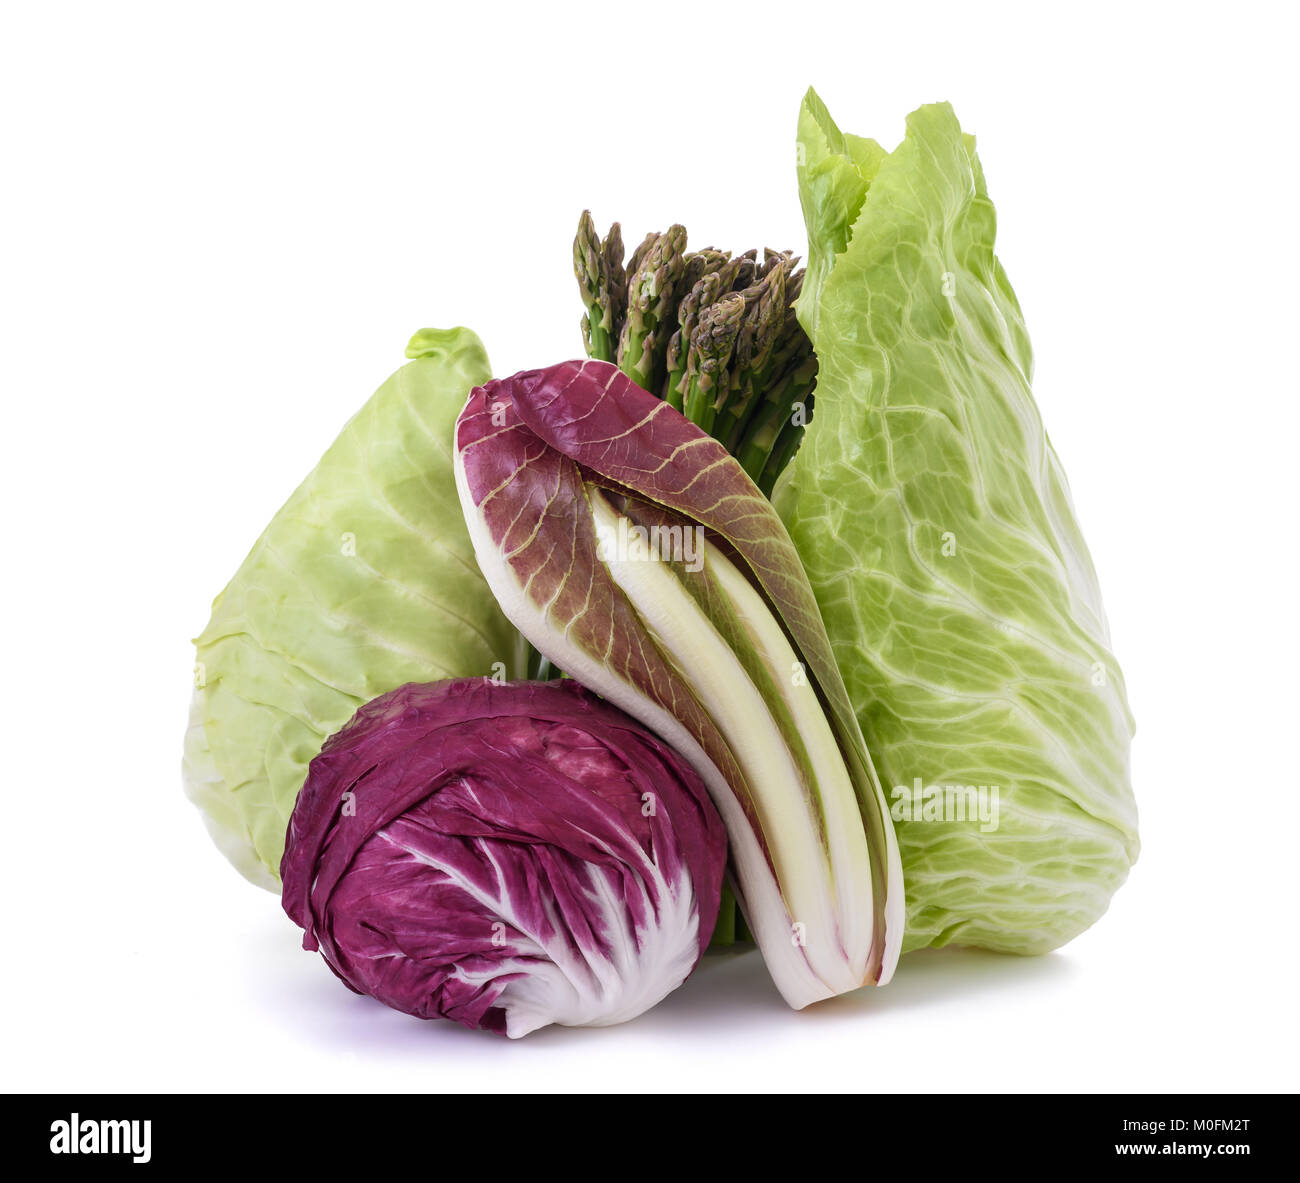 Cicoria radicchio asparagi fine salade isolato su bianco Foto Stock